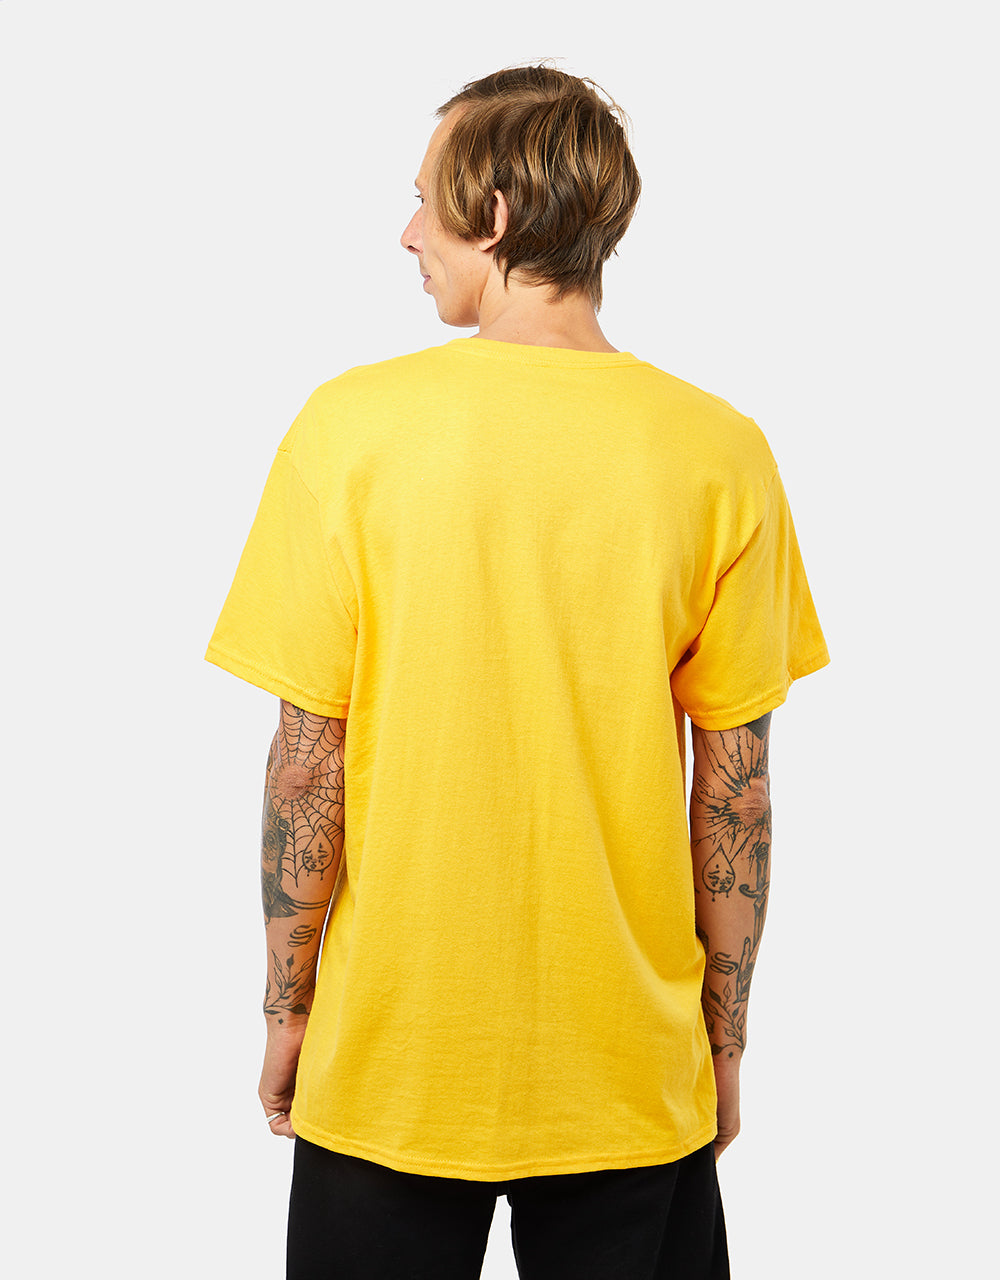 Playdude Trip T-Shirt - Gold